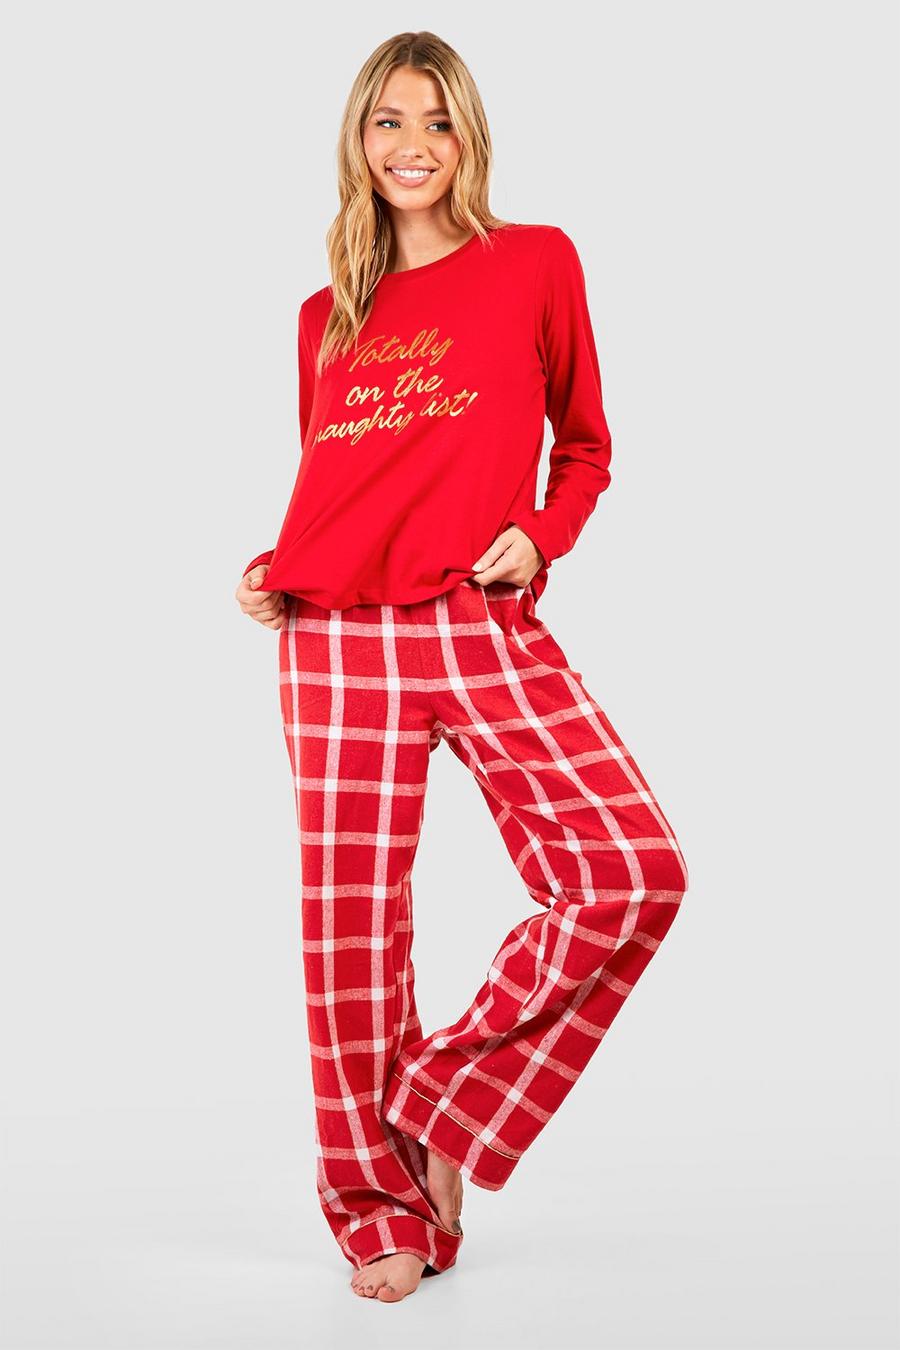 Pyjama de Noël à slogan Naughty List, Red rouge